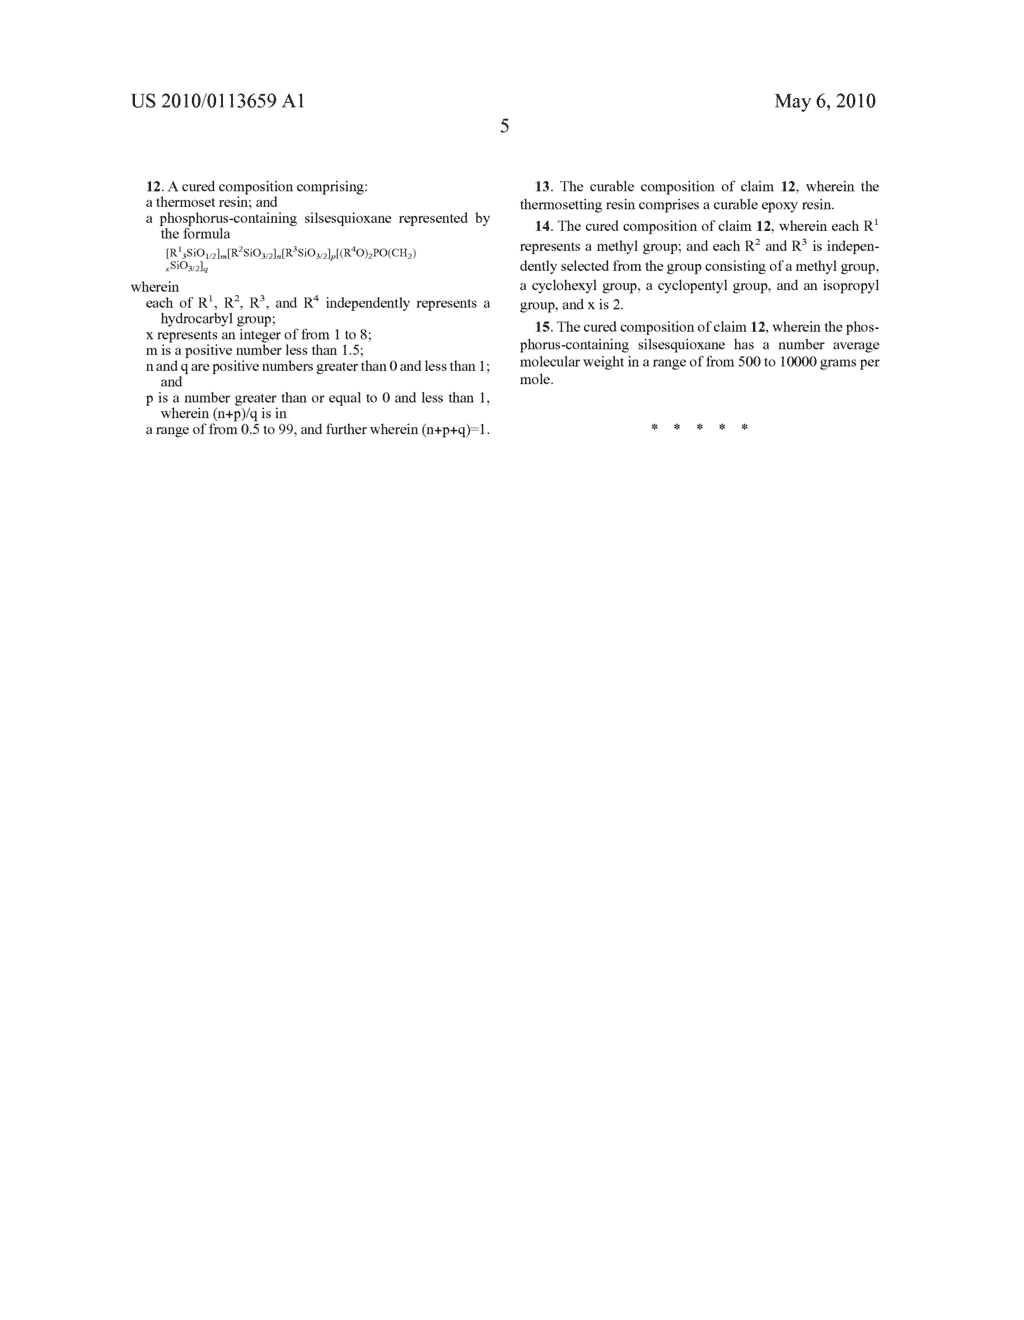 PHOSPHORUS-CONTAINING SILSESQUIOXANE DERIVATIVES AS FLAME RETARDANTS - diagram, schematic, and image 06